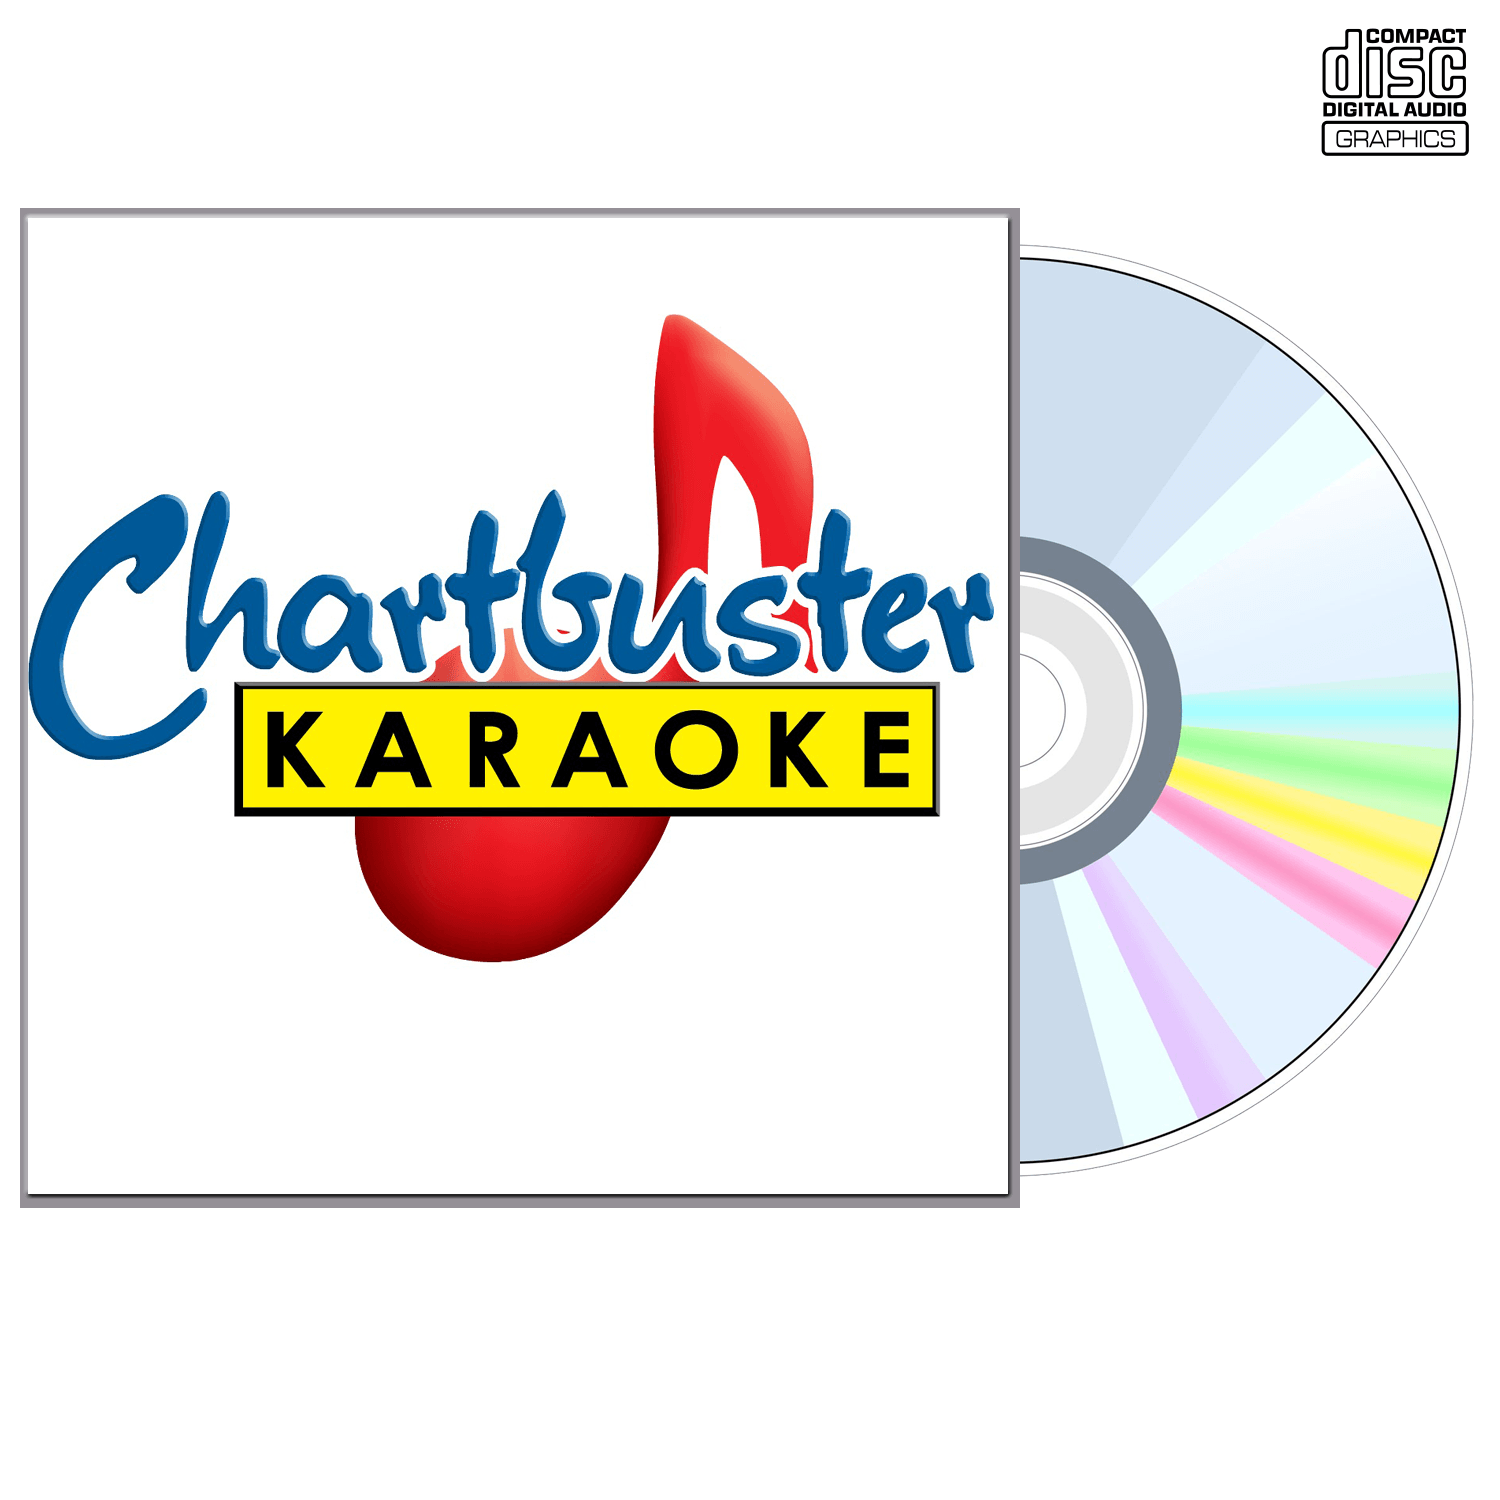 Tina Turner - CD+G - Chartbuster Karaoke - Karaoke Home Entertainment